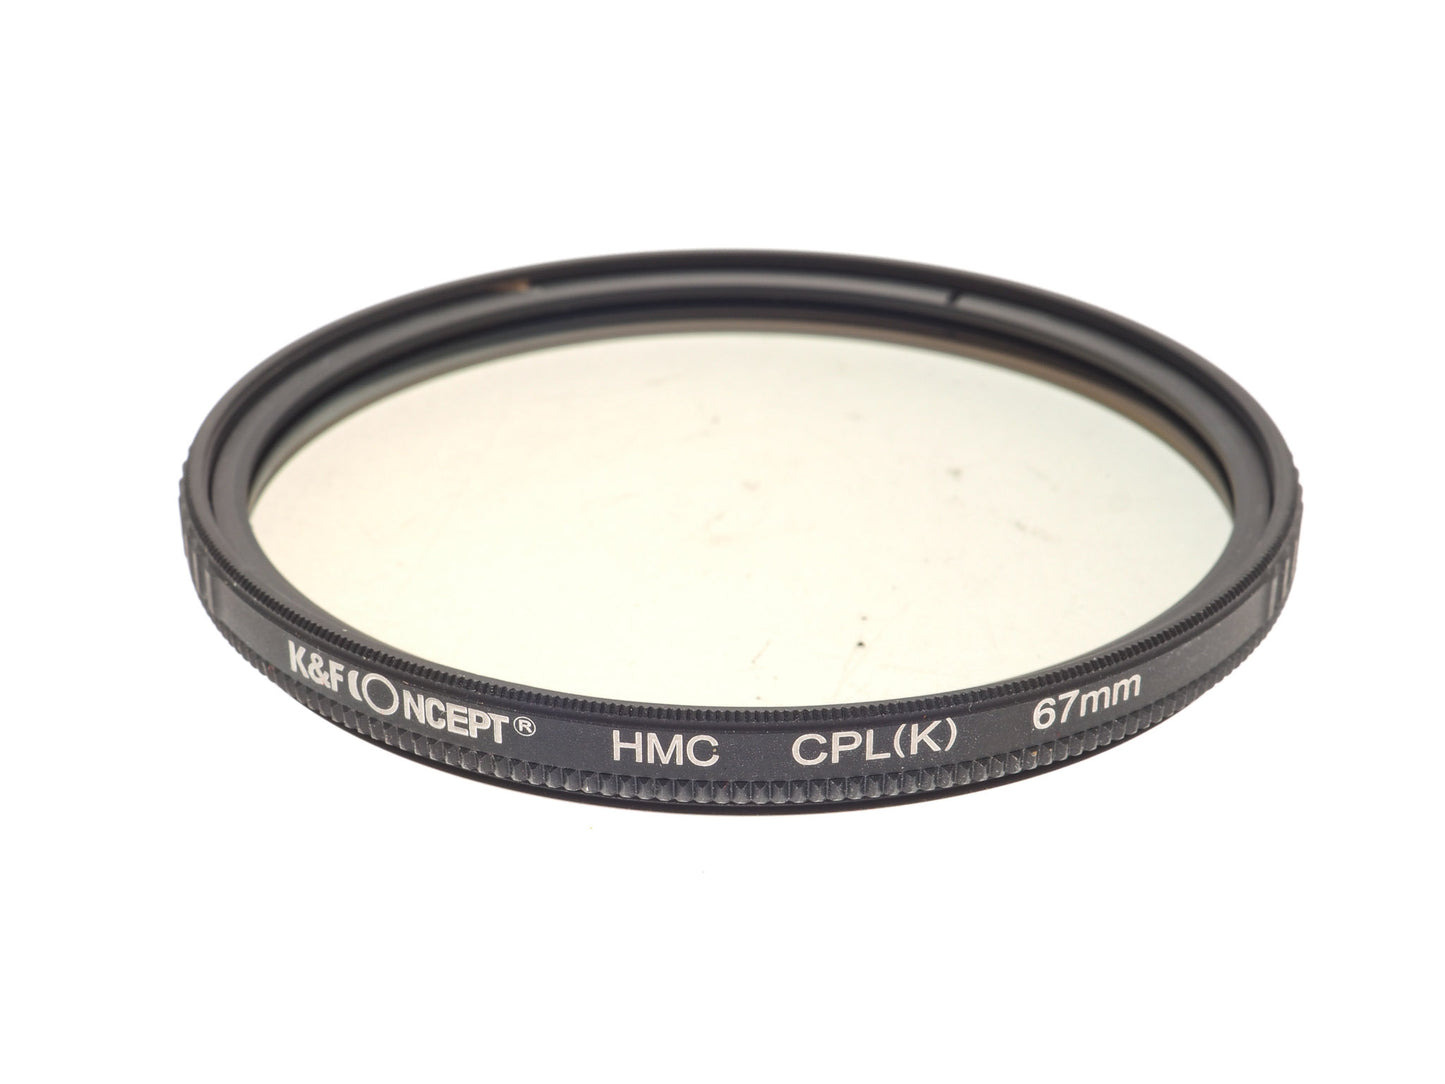 K&F Concept 67mm Circular Polarizing Filter CPL(K) HMC - Accessory